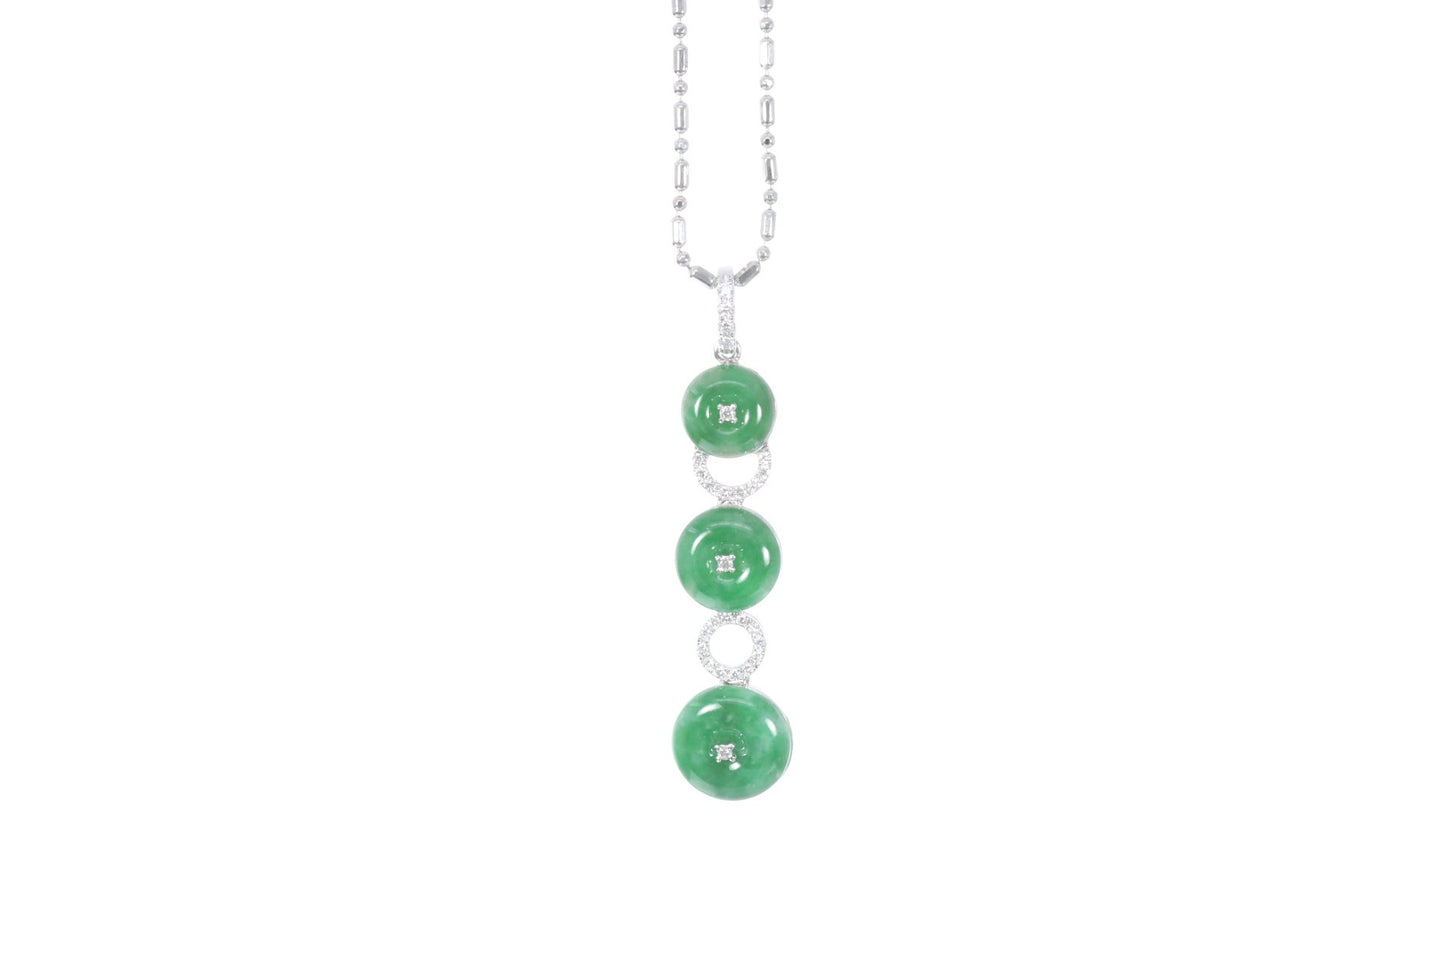 Red String Necklace, Lucky Jade Necklace, Jadeite Heart Pendant Neckla –  Jennifer Jade Shop